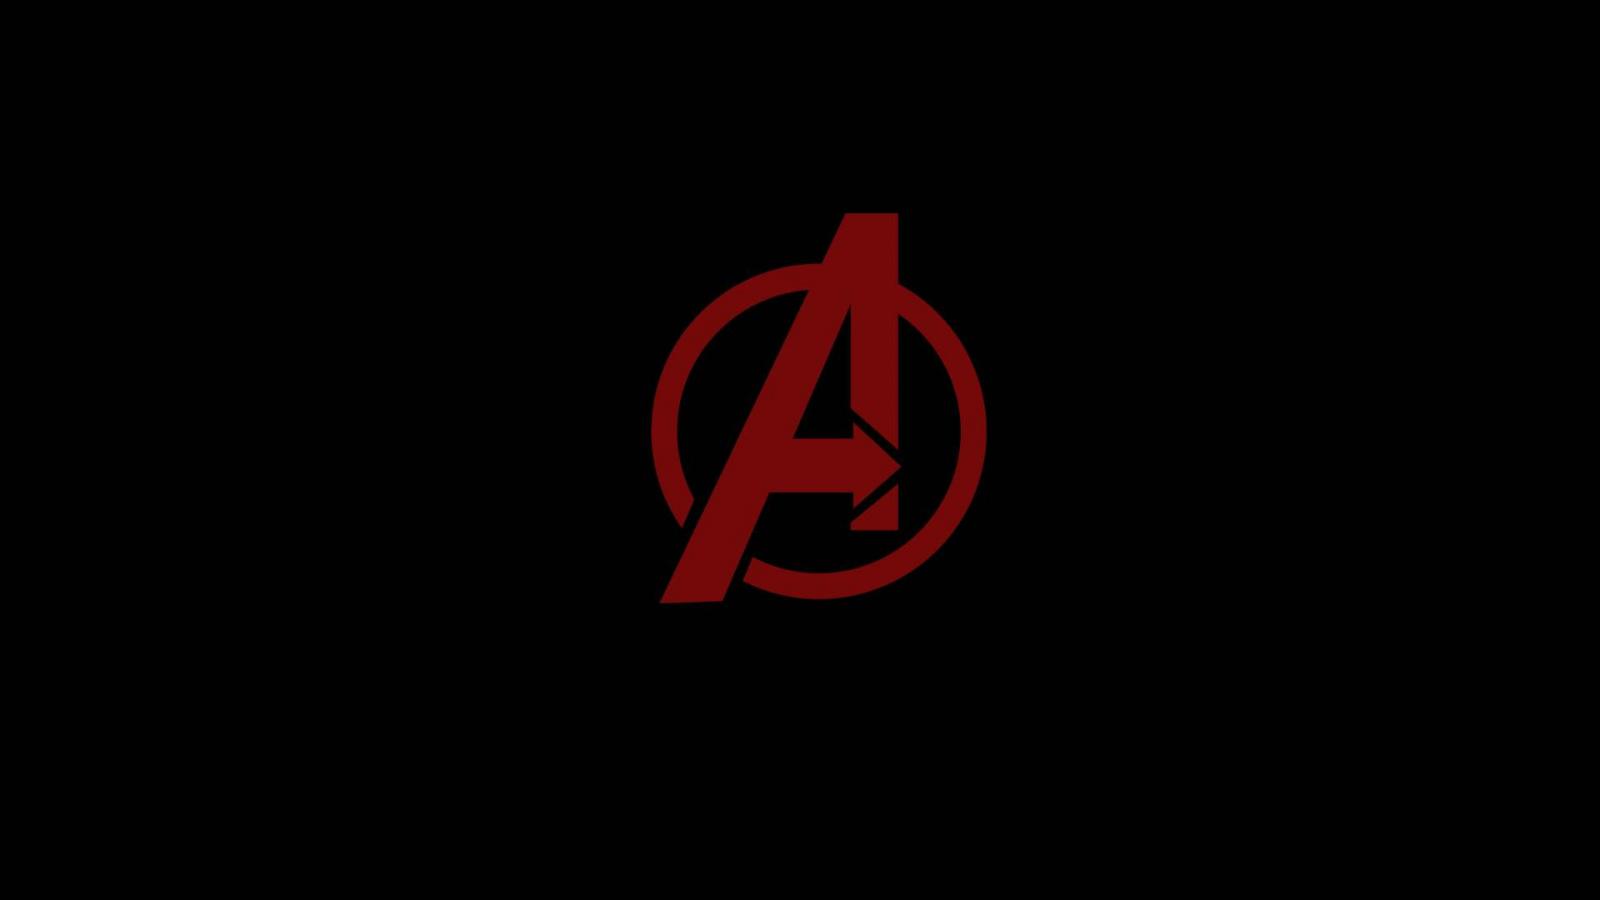 Red, The Avengers, Marvel Comics, Brand, Symbol 16:9 HD+ Wallpaper